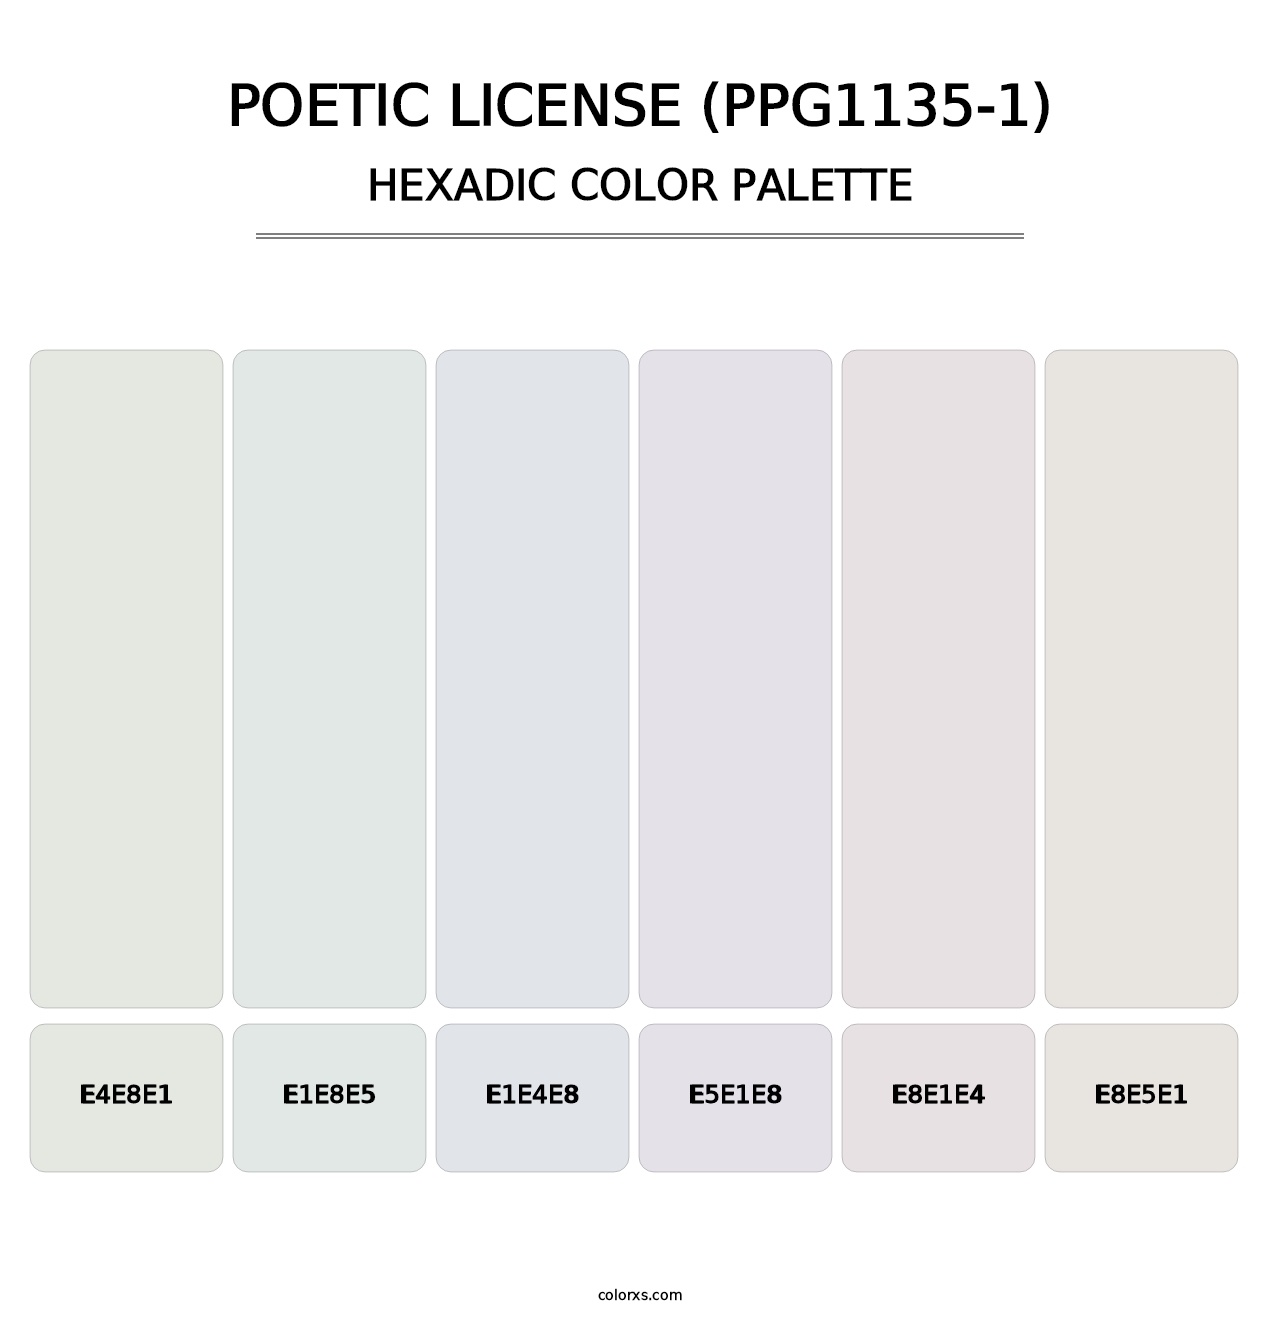 Poetic License (PPG1135-1) - Hexadic Color Palette